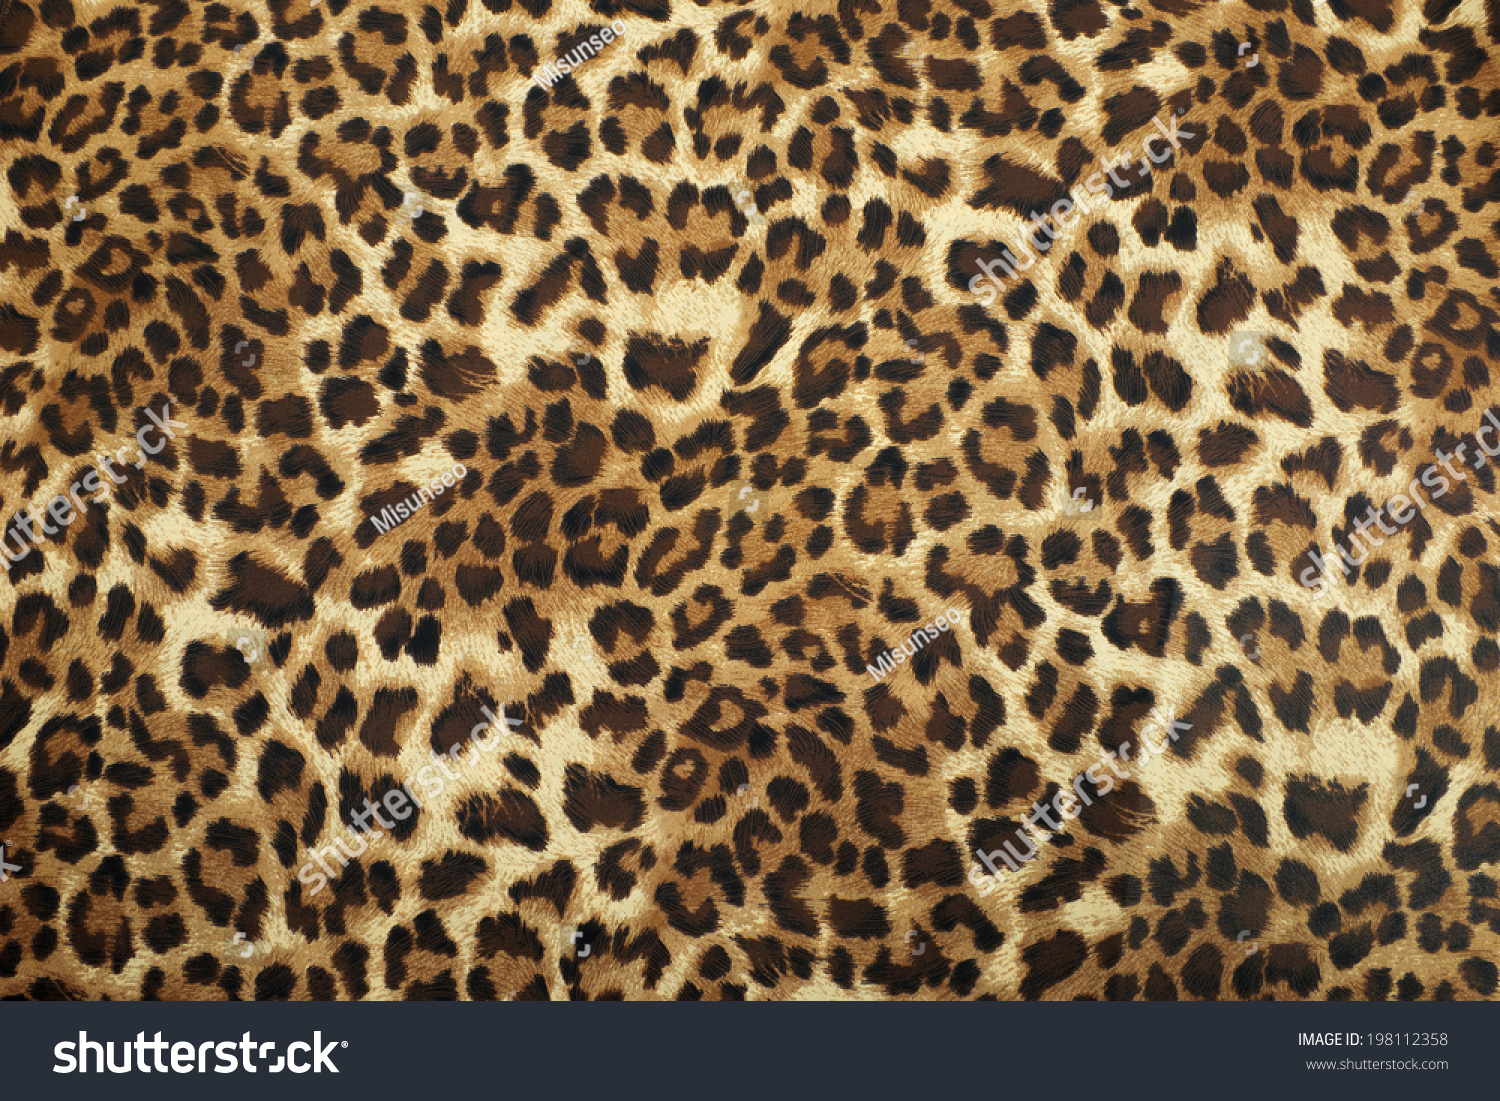 wild animal pattern background or texture #198112358